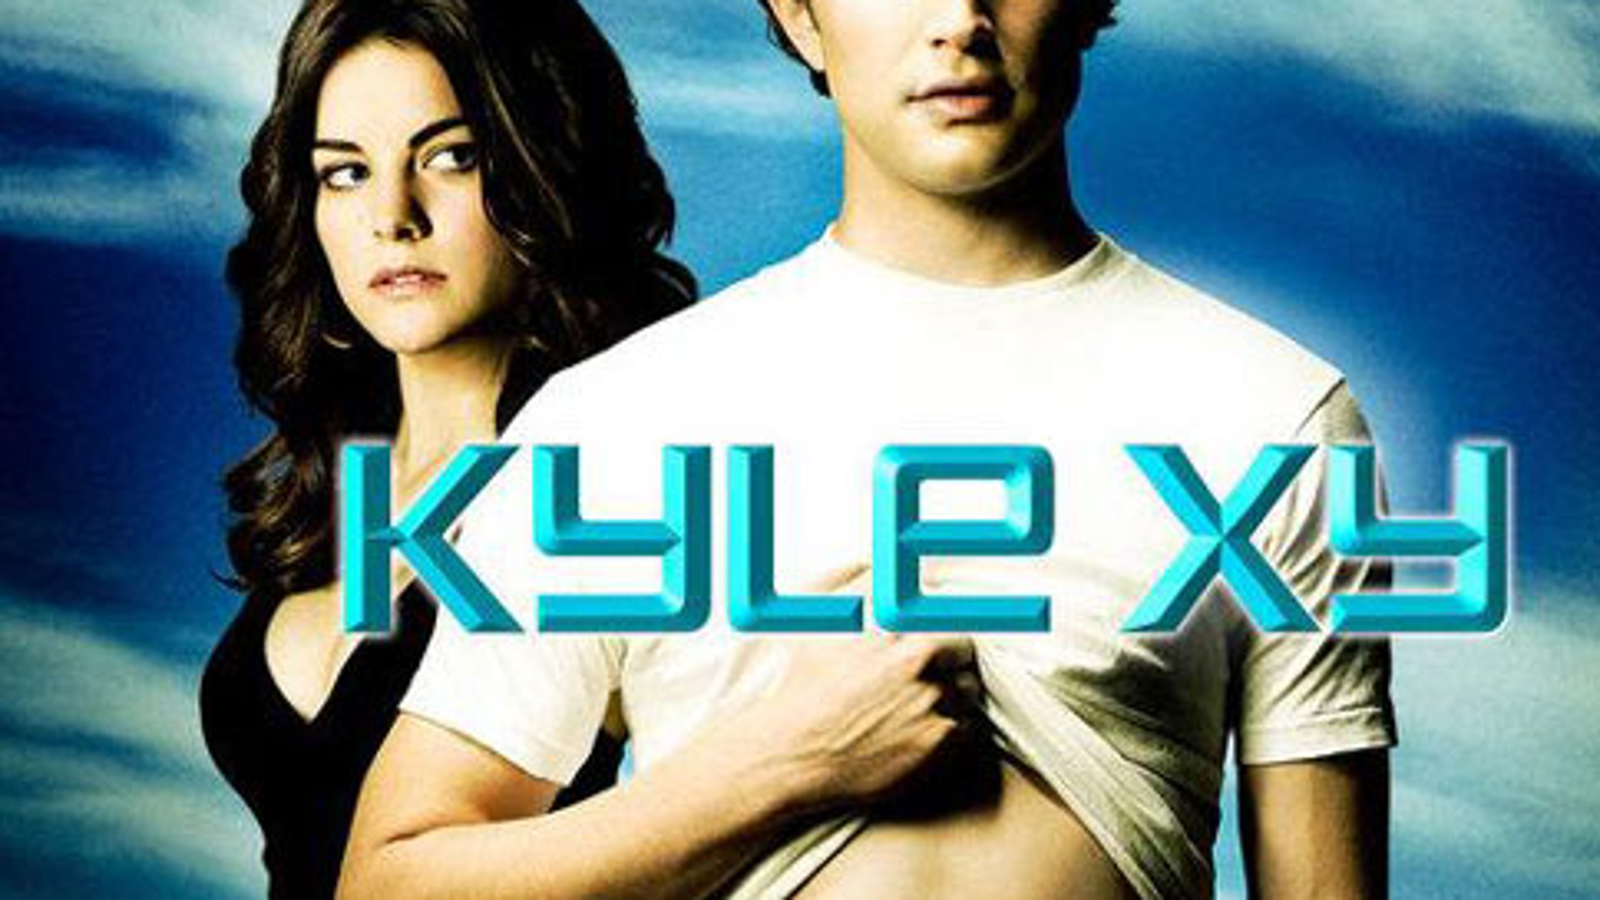 watch kyle xy season 4